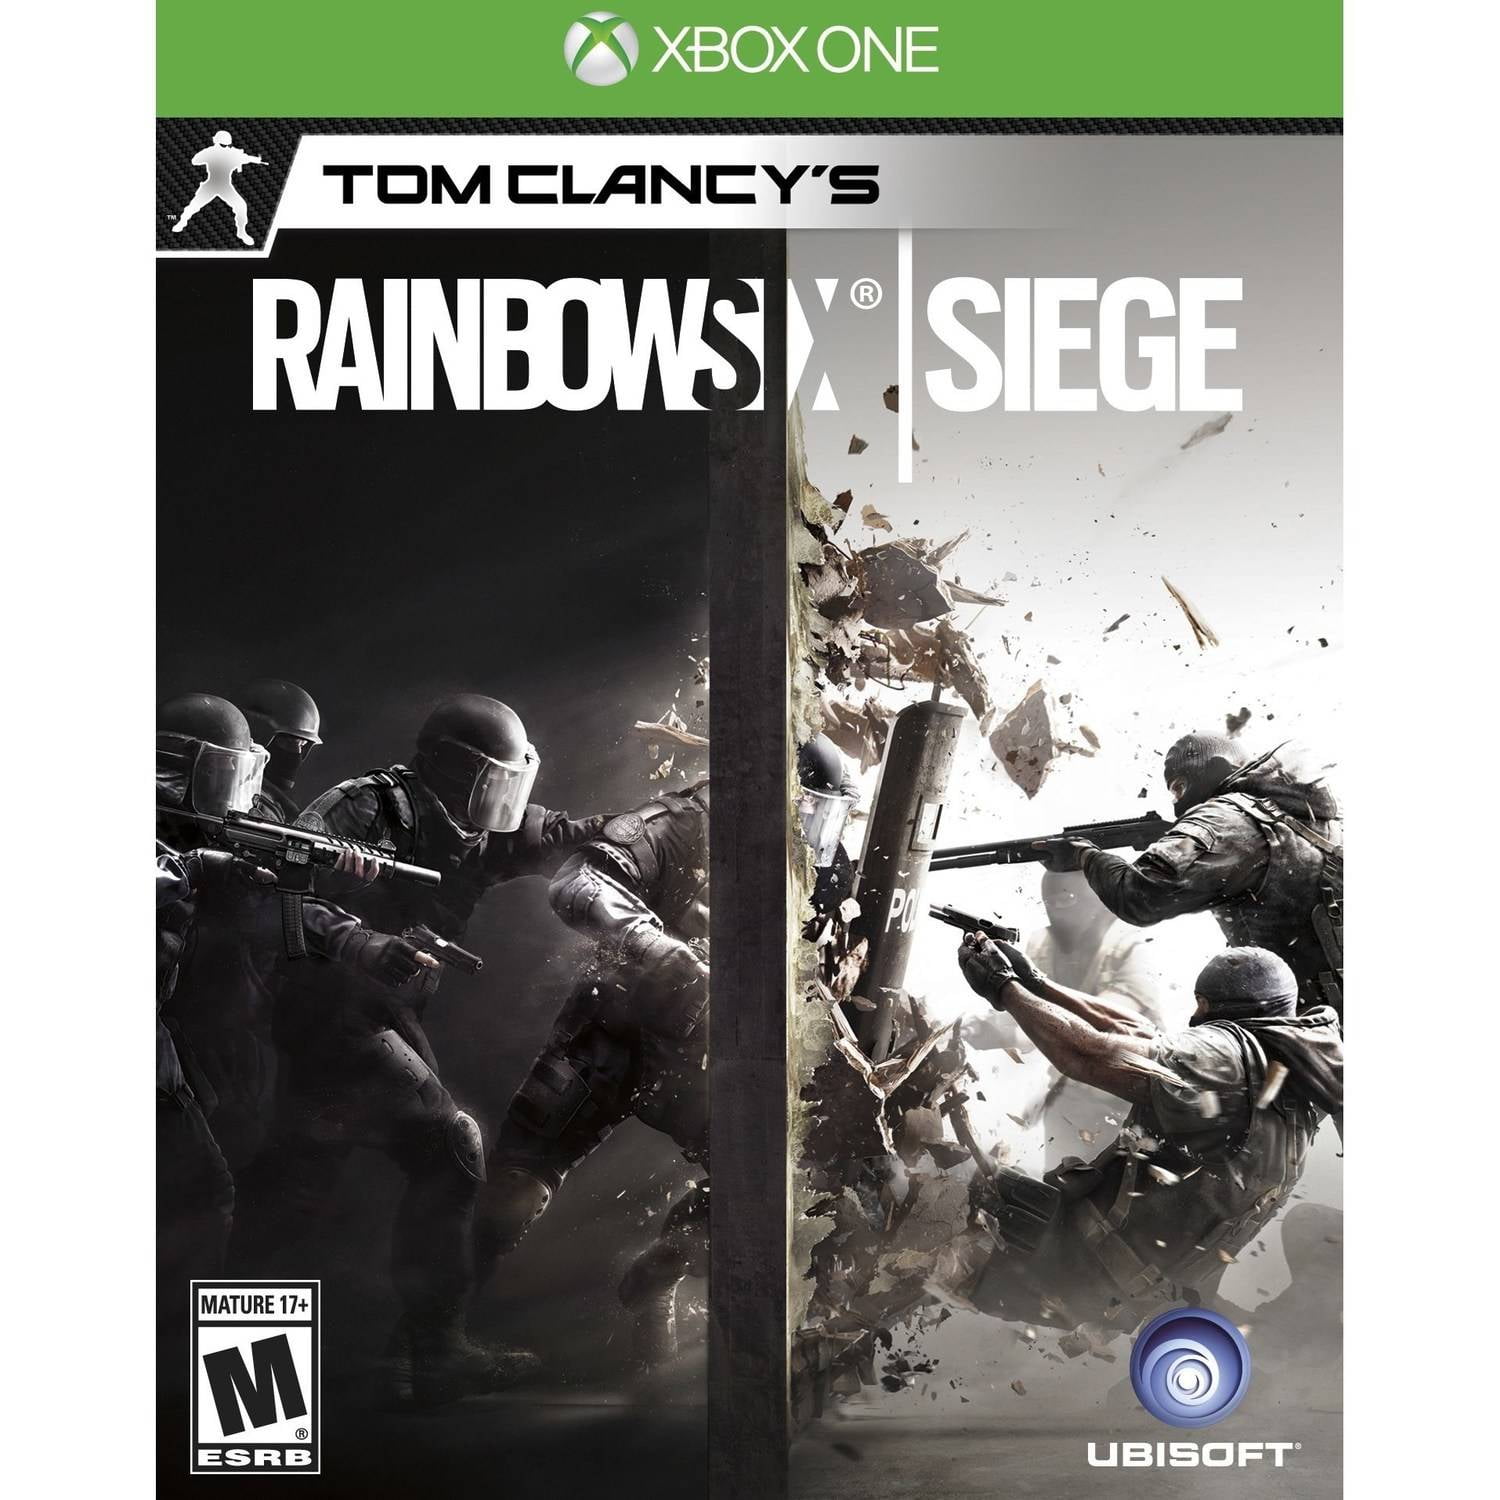 Ellendig instinct brandstof Rainbow Six Siege (Xbox One) - Pre-Owned Ubisoft - Walmart.com